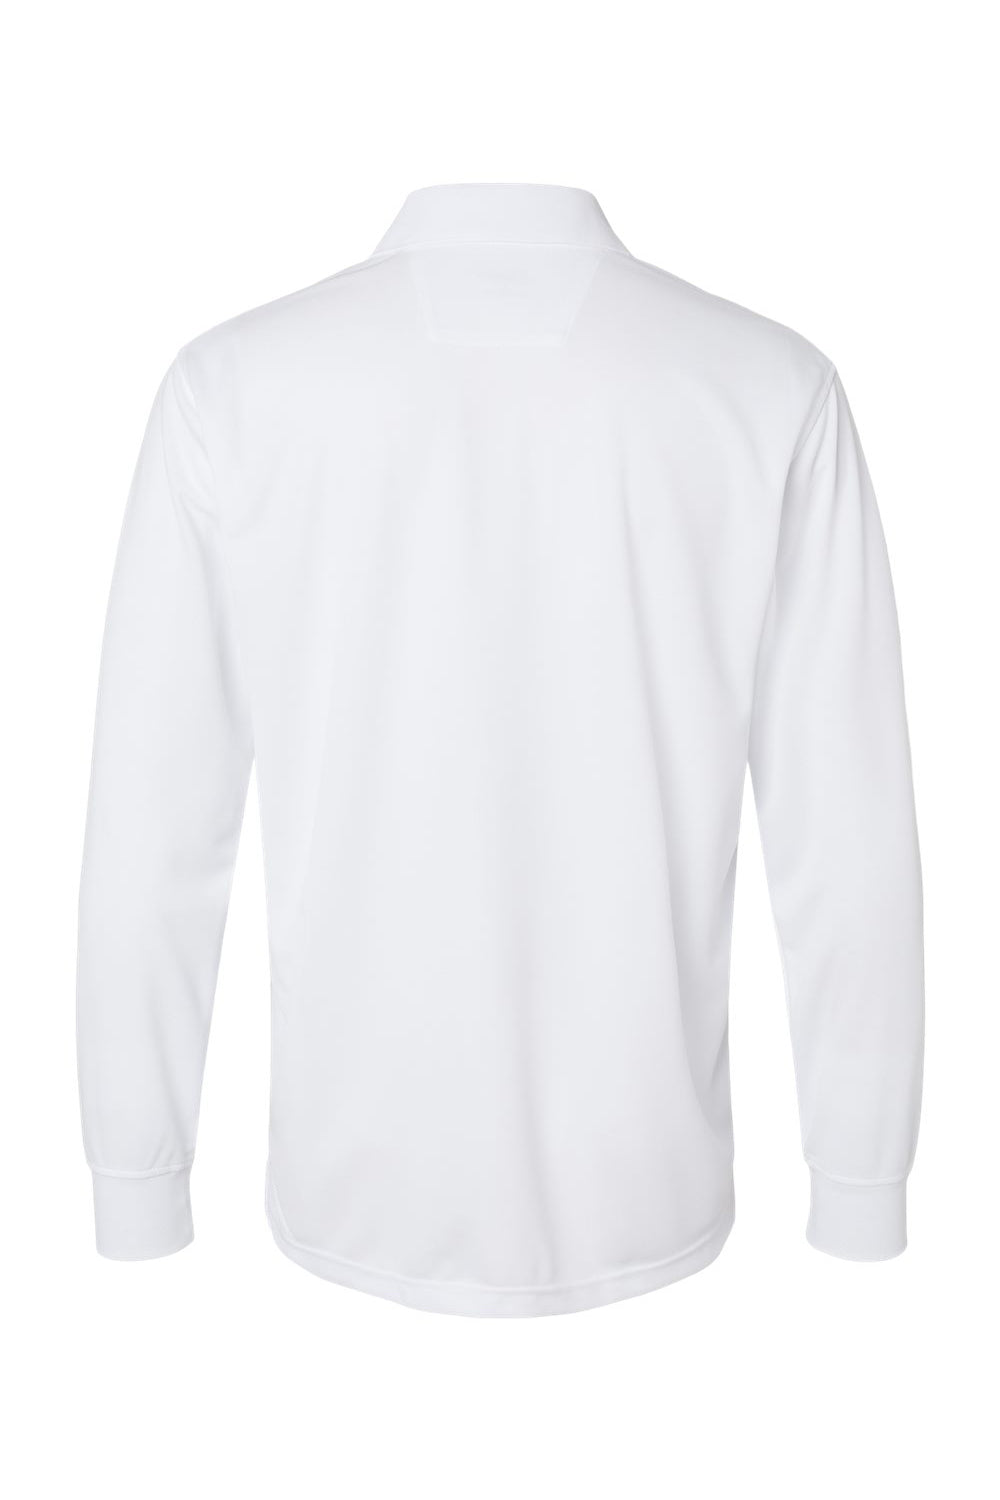 Paragon 110 Mens Prescott Long Sleeve Polo Shirt White Flat Back